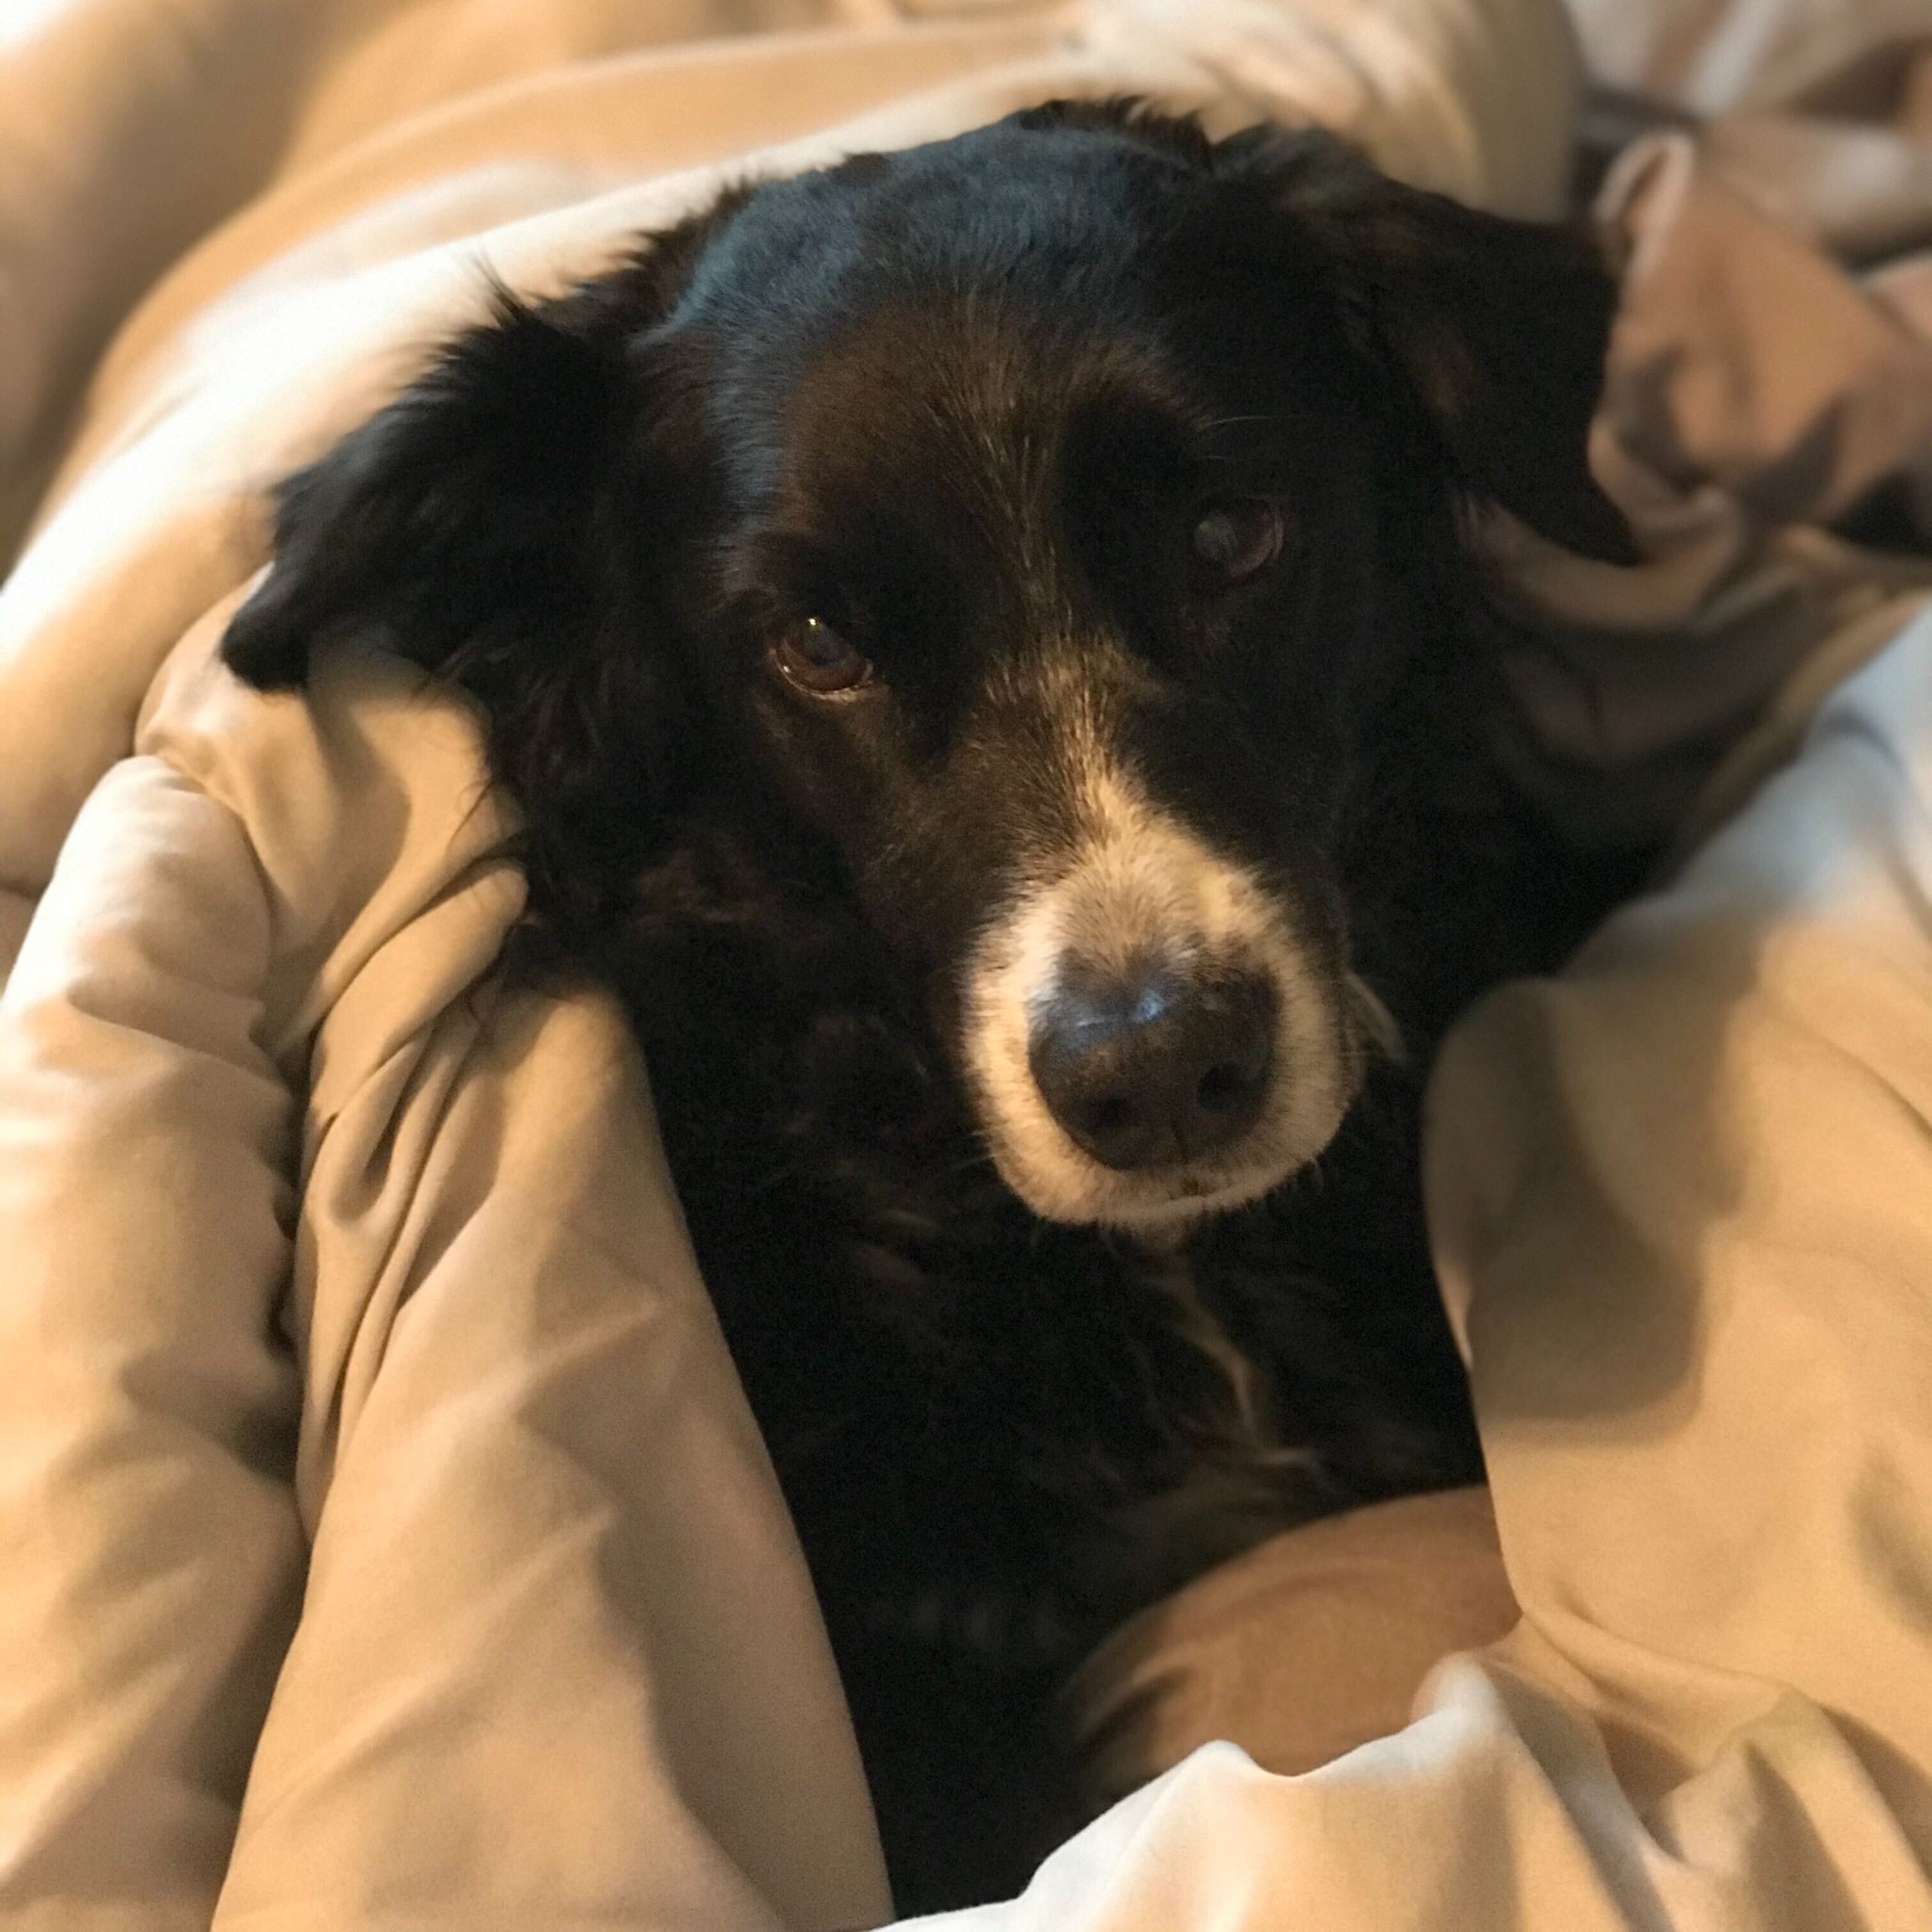 Dog covered in blanket.